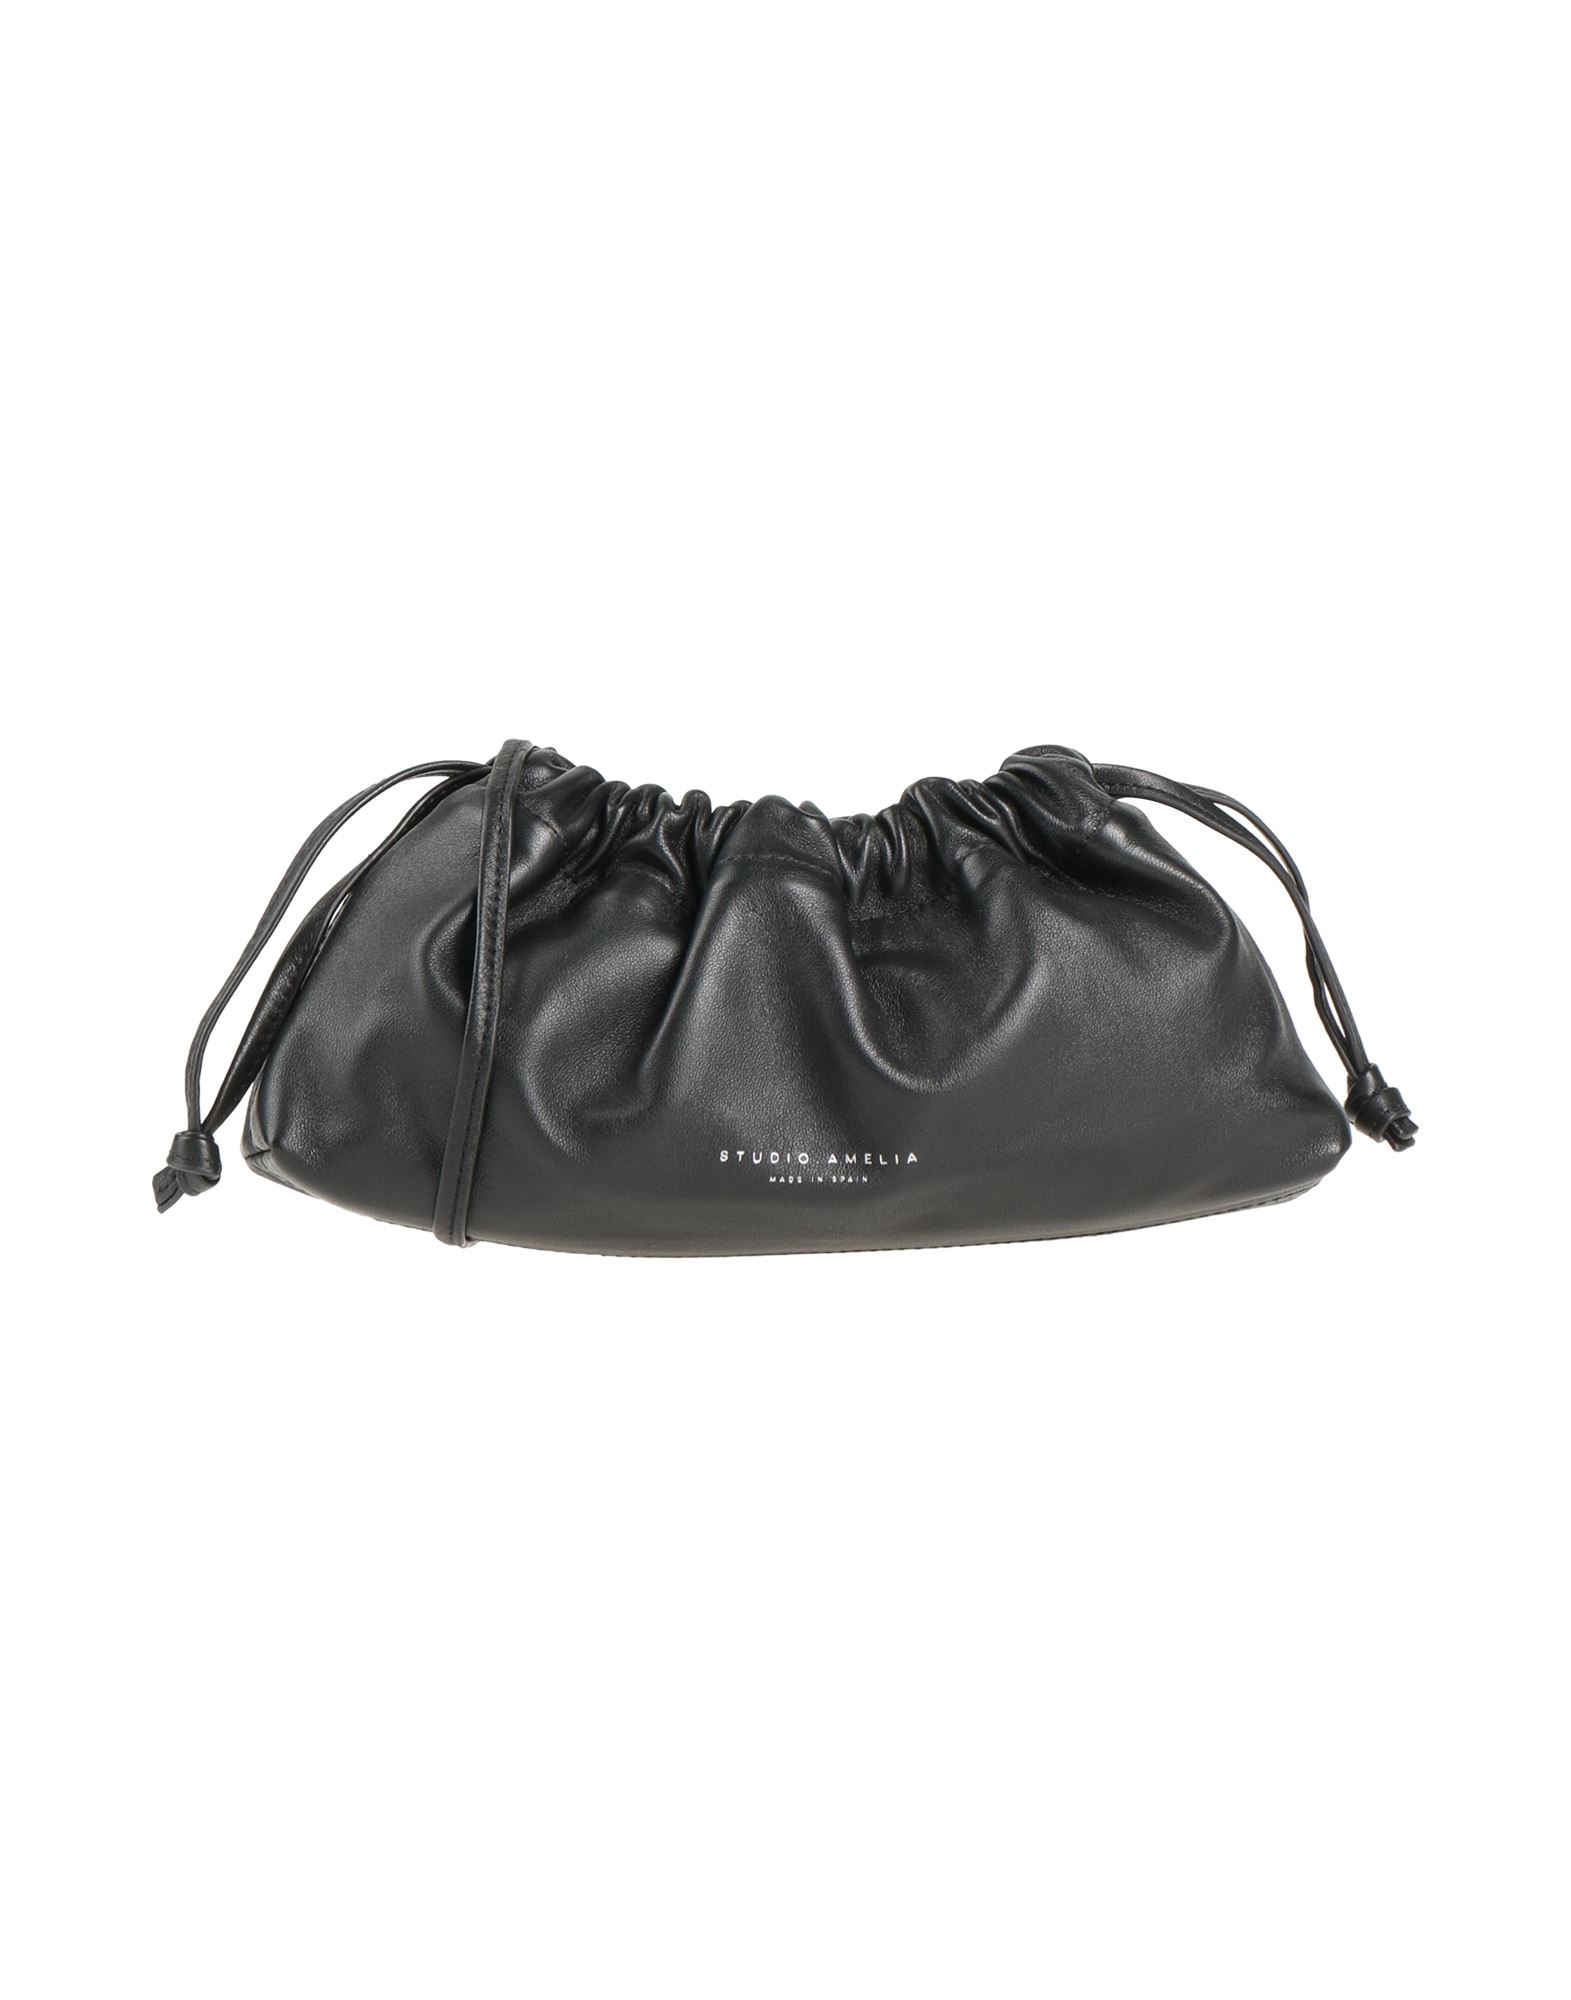 Studio Amelia Handbags In Black